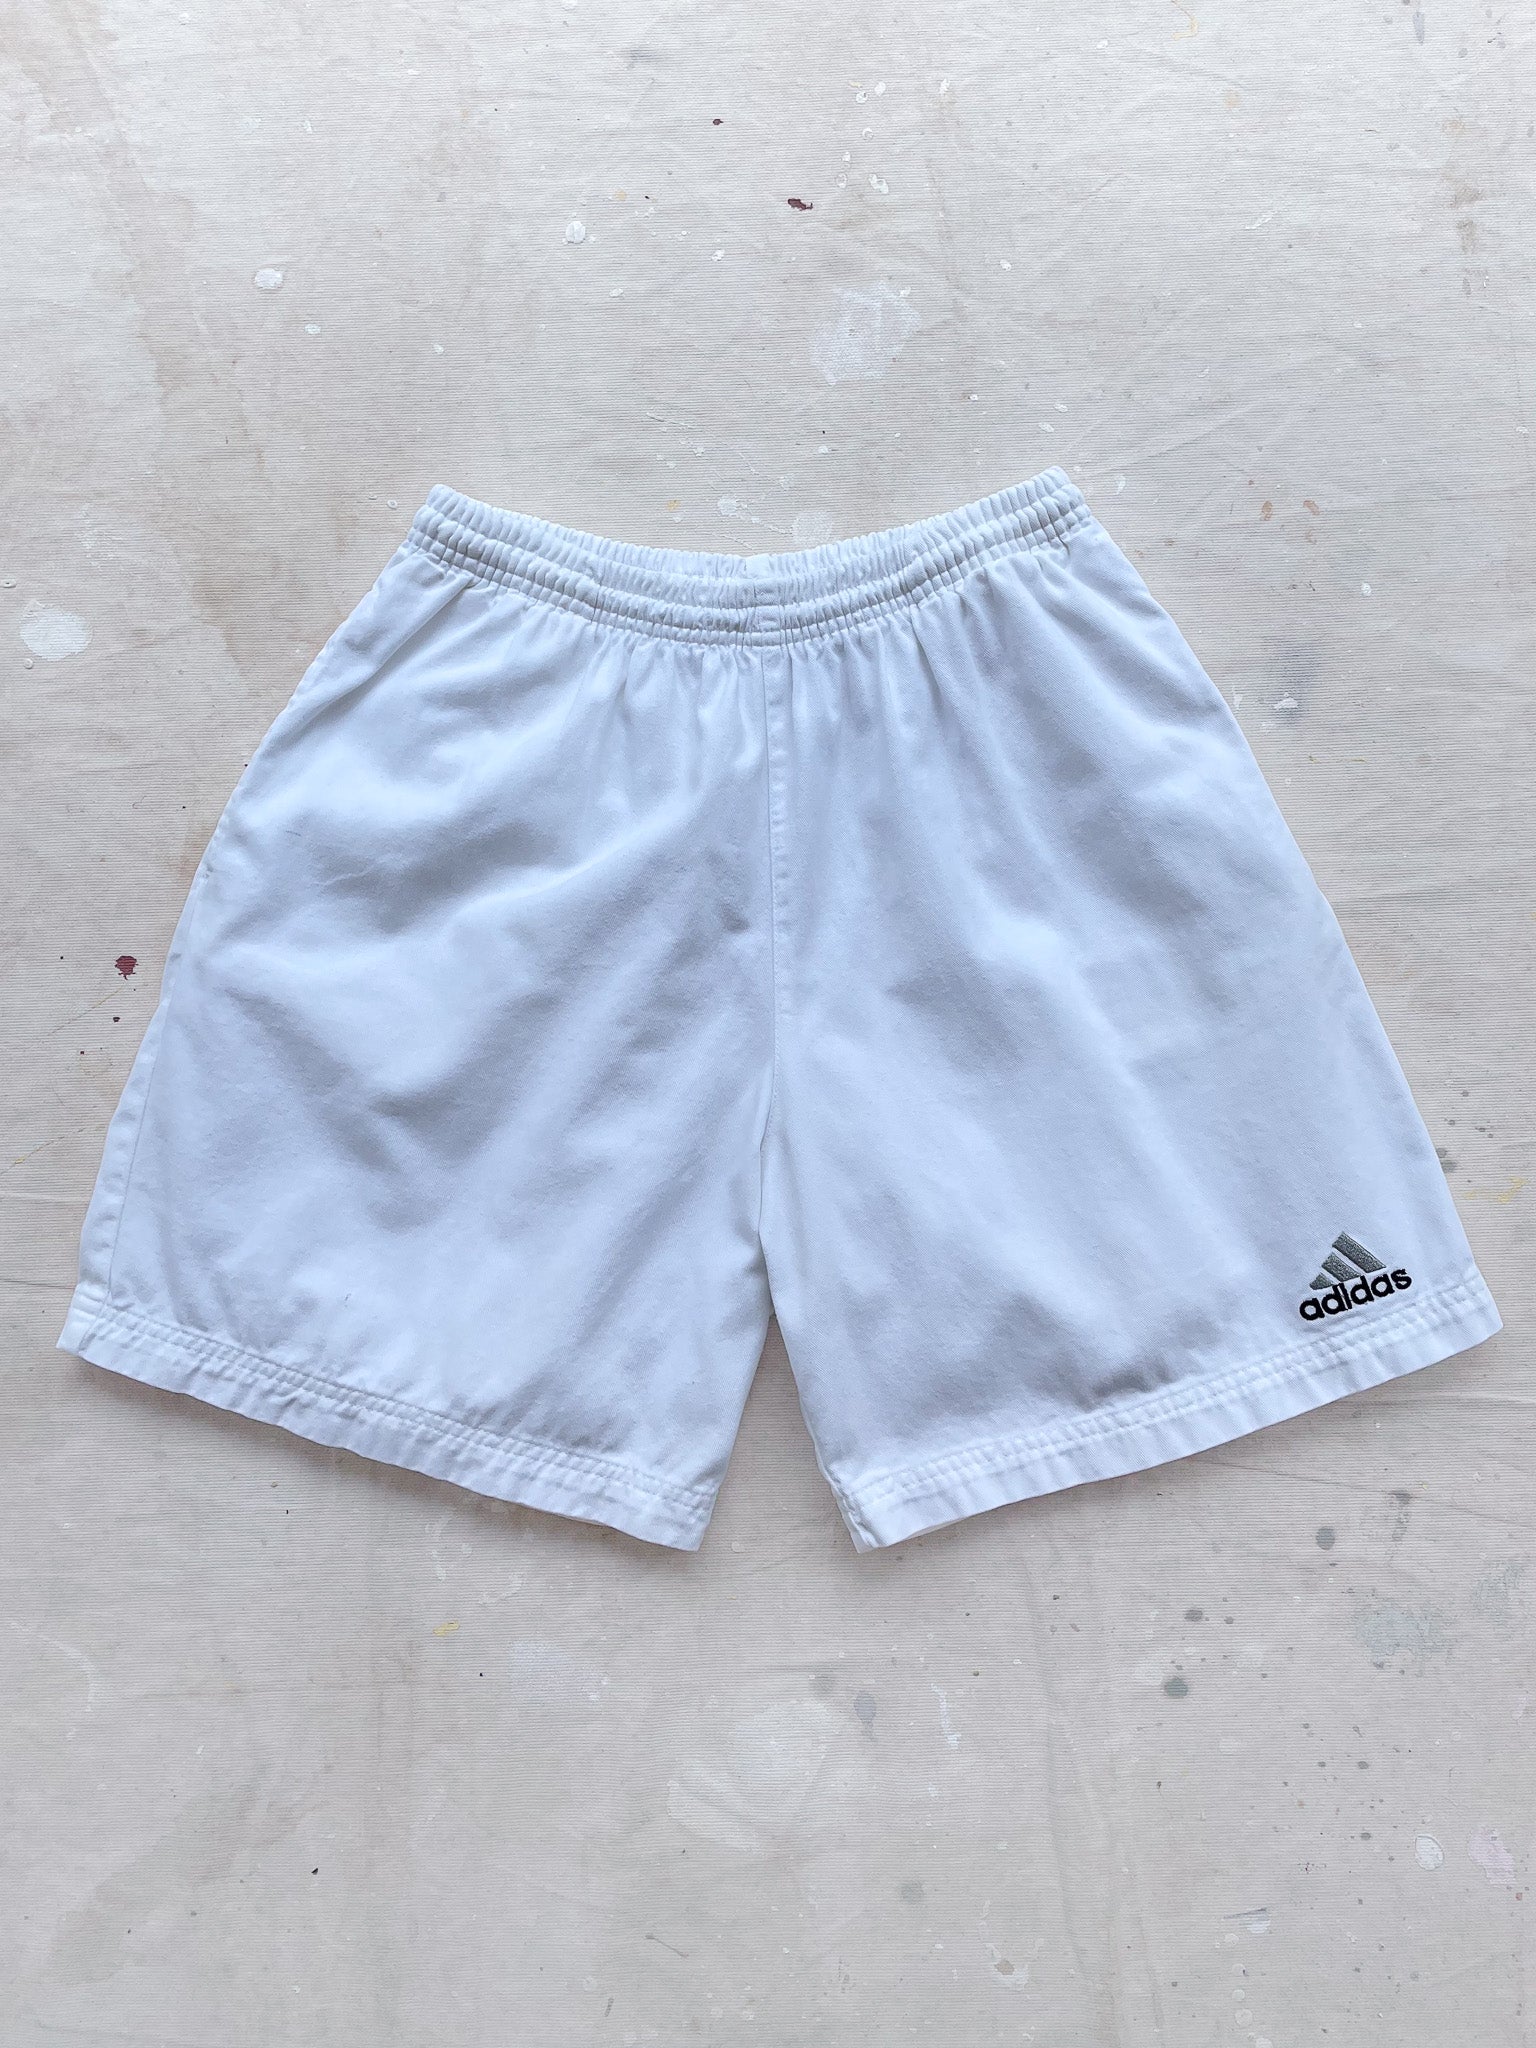 Mens New Adidas Originals 3Stripe Cotton Shorts Pants Casual Summer - Black  Grey | eBay